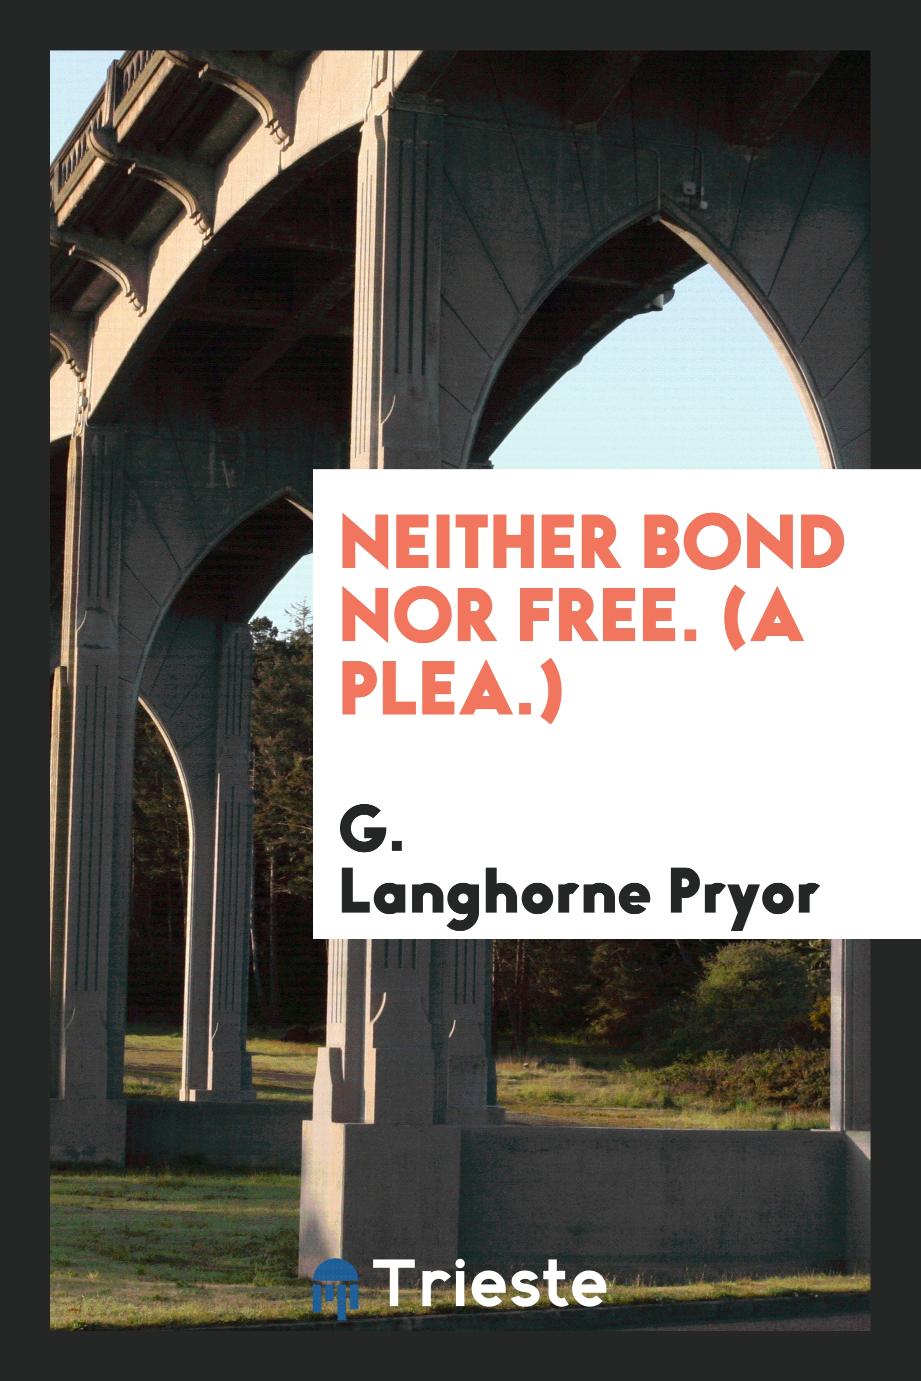 Neither bond nor free. (A plea.)